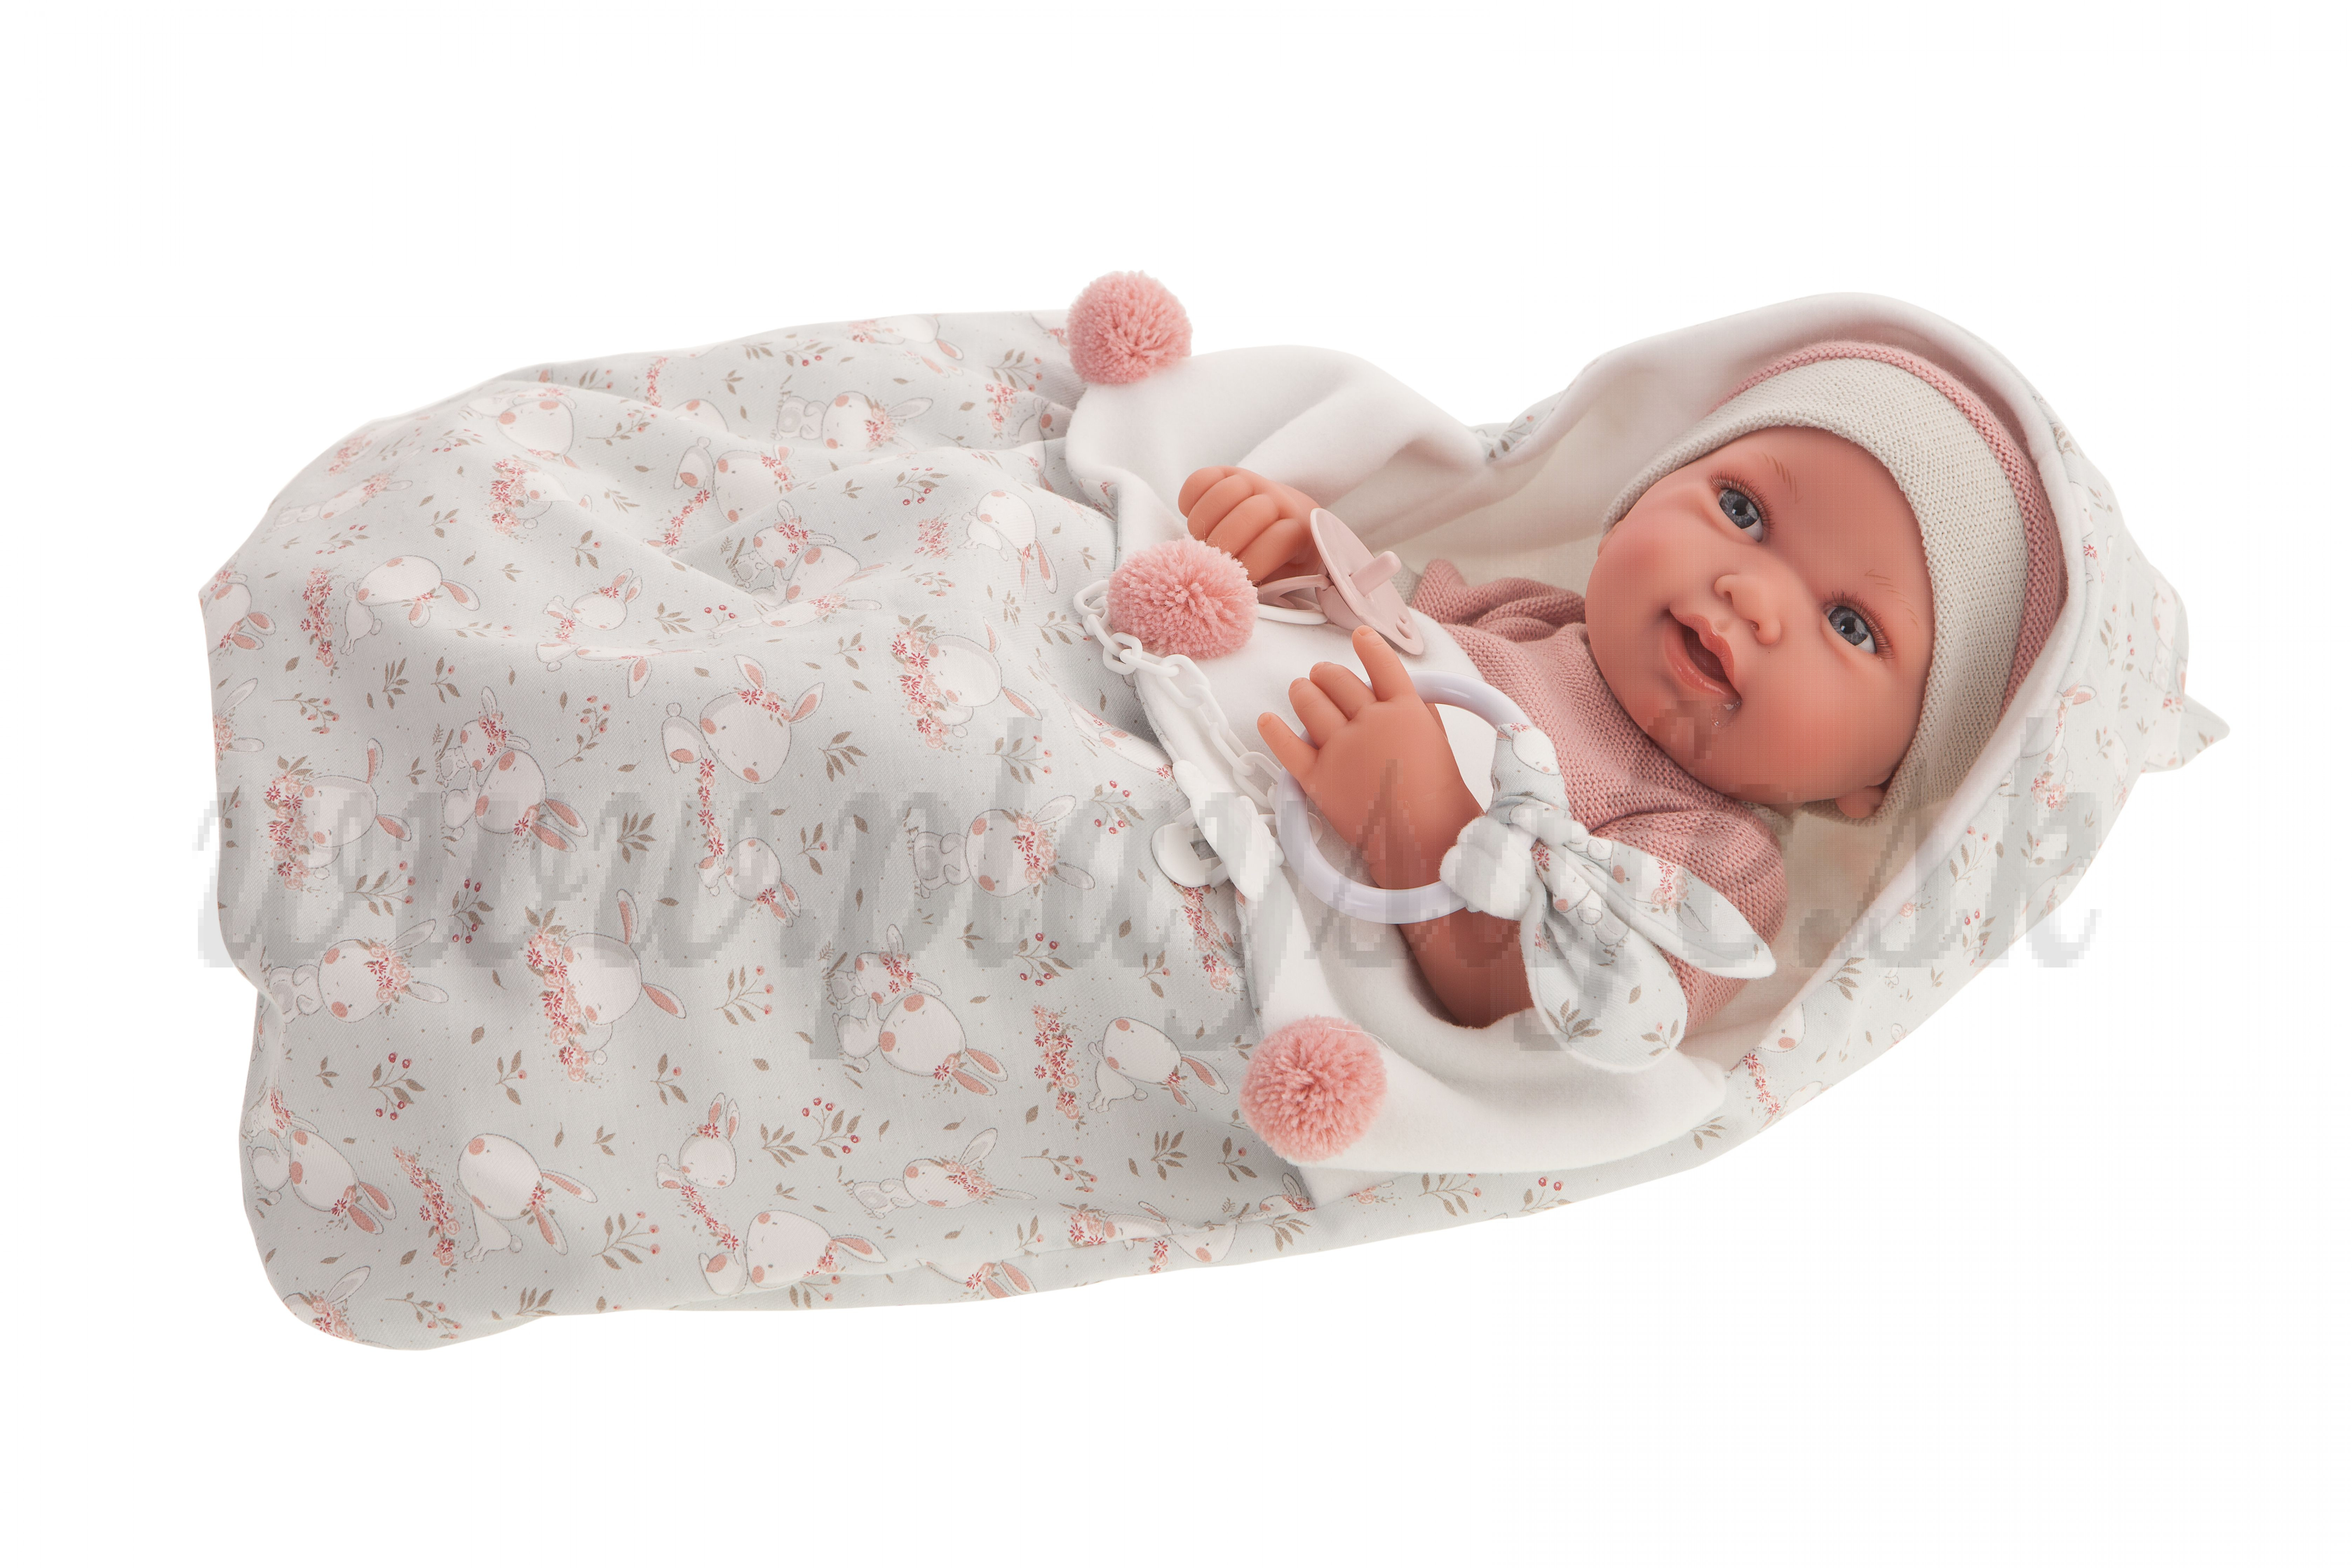 Antonio Juan Pipa Baby Doll, 42cm in sleeping bag